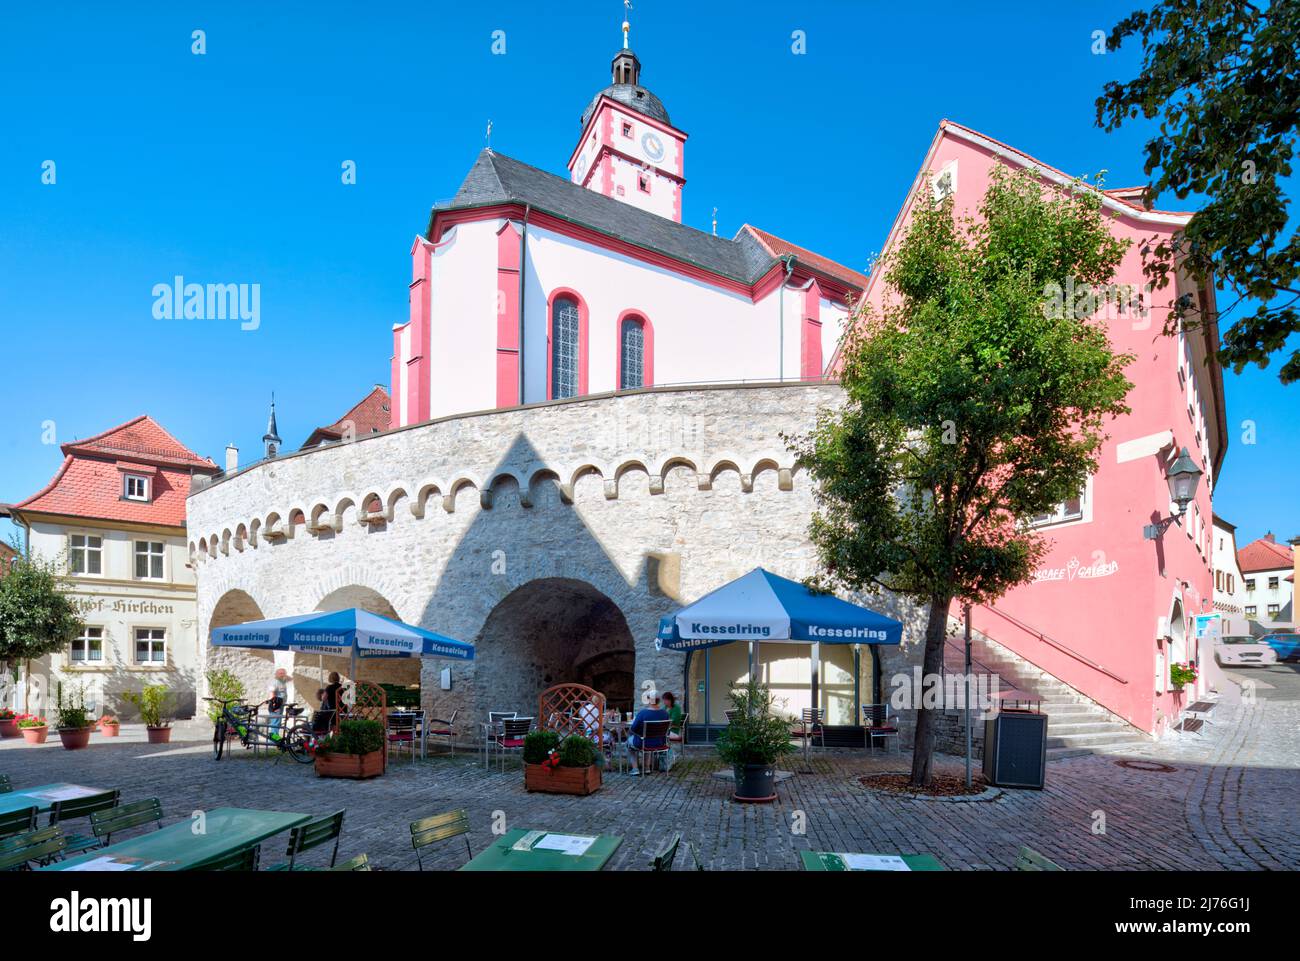 St. Augustine, town parish church, market, house facade, town view, autumn, Dettelbach, Franconia, Bavaria, Germany, Europe Stock Photo